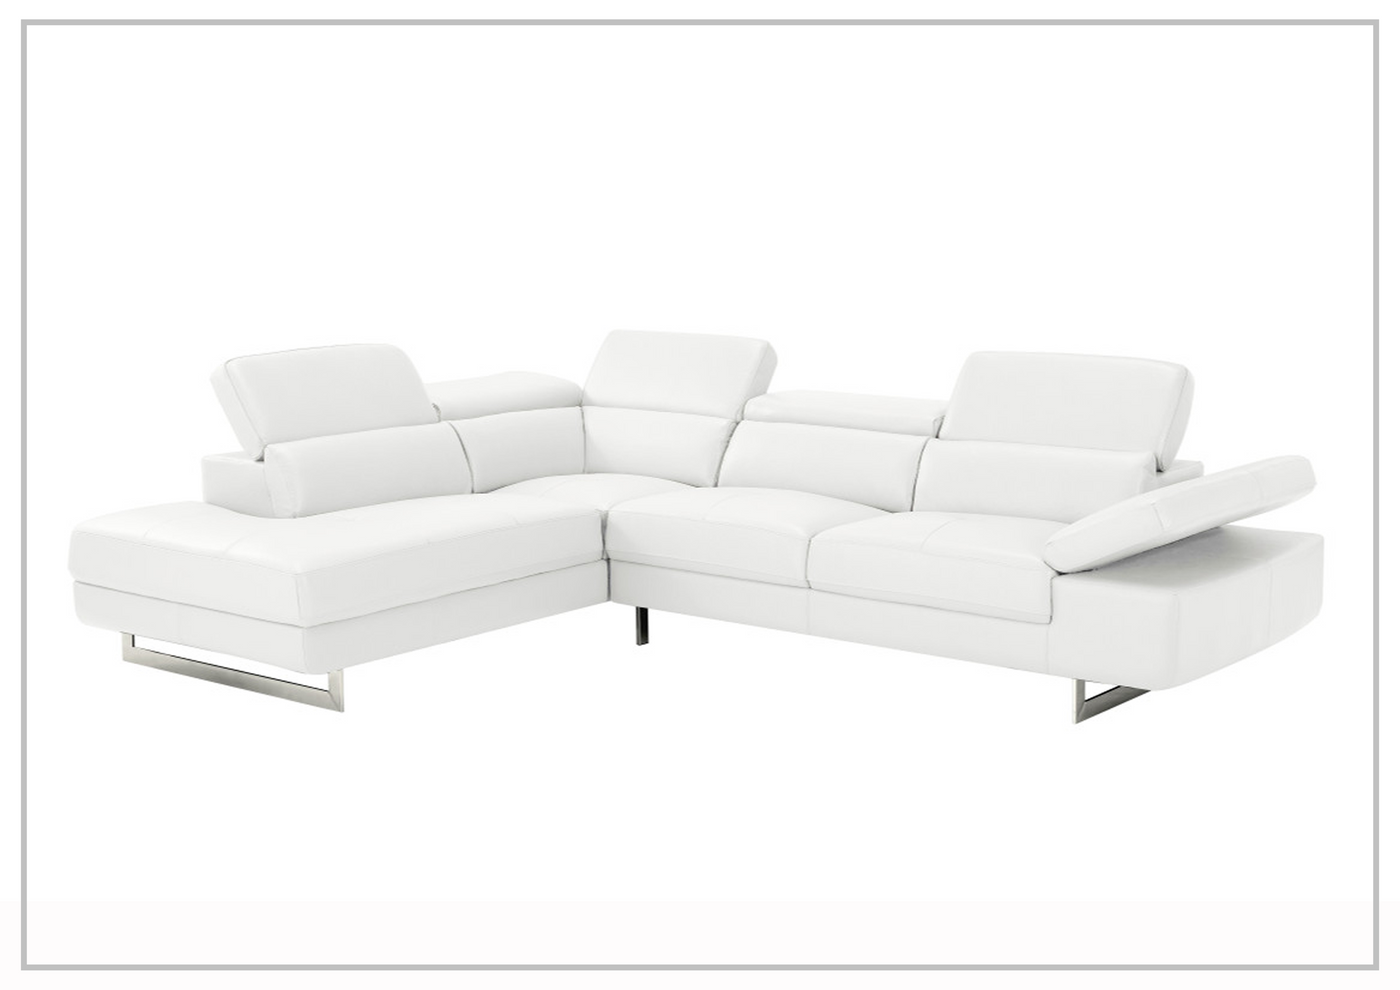 Gio Italia Barts Sectional Sofa with Motion Headrests